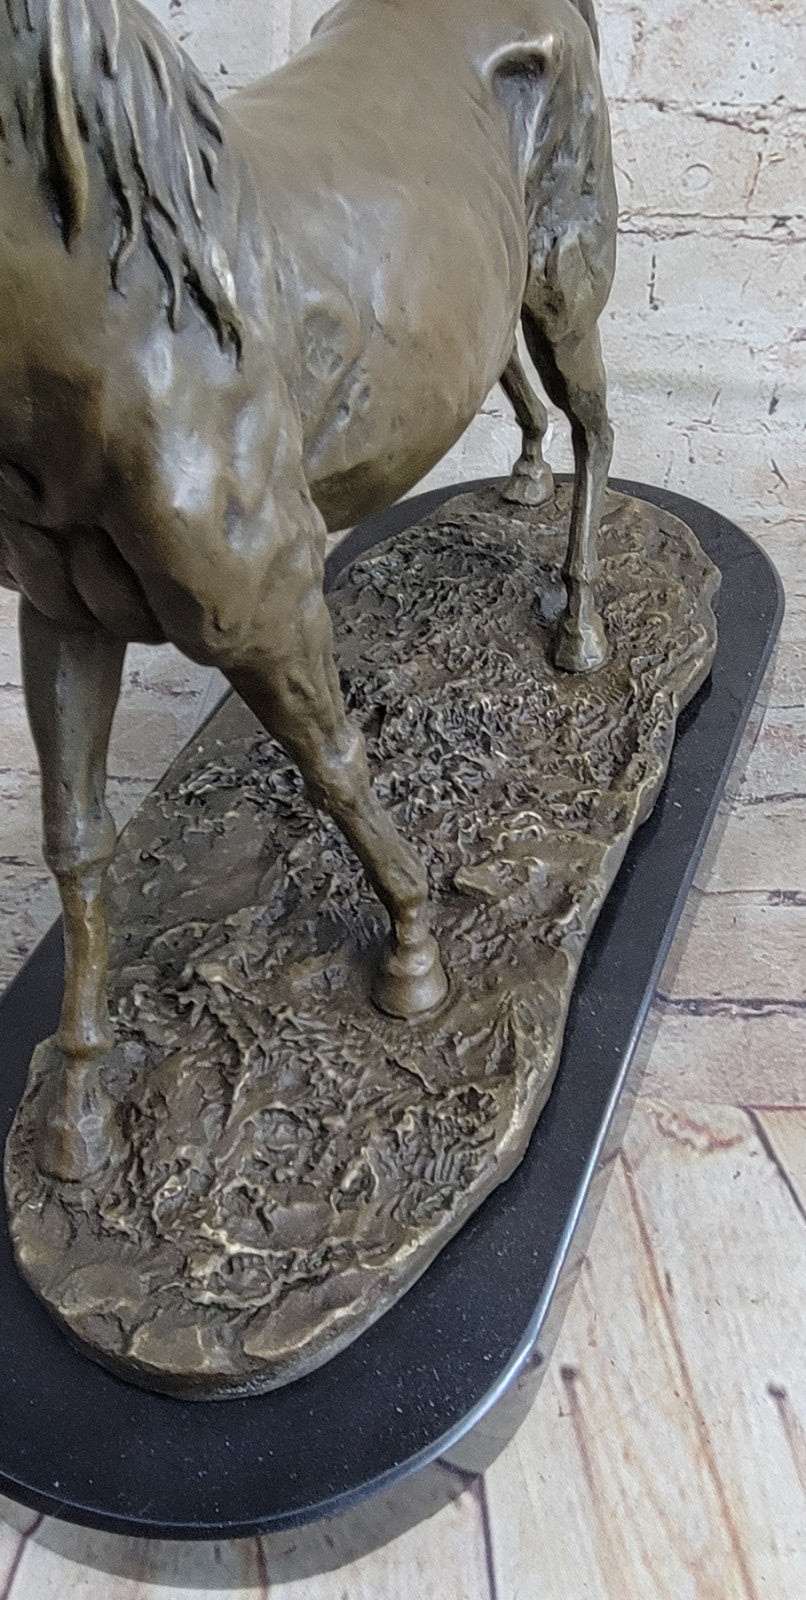 Handcrafted bronze sculpture SALE Tro Horse Racing Stallion Art Modern Abstract